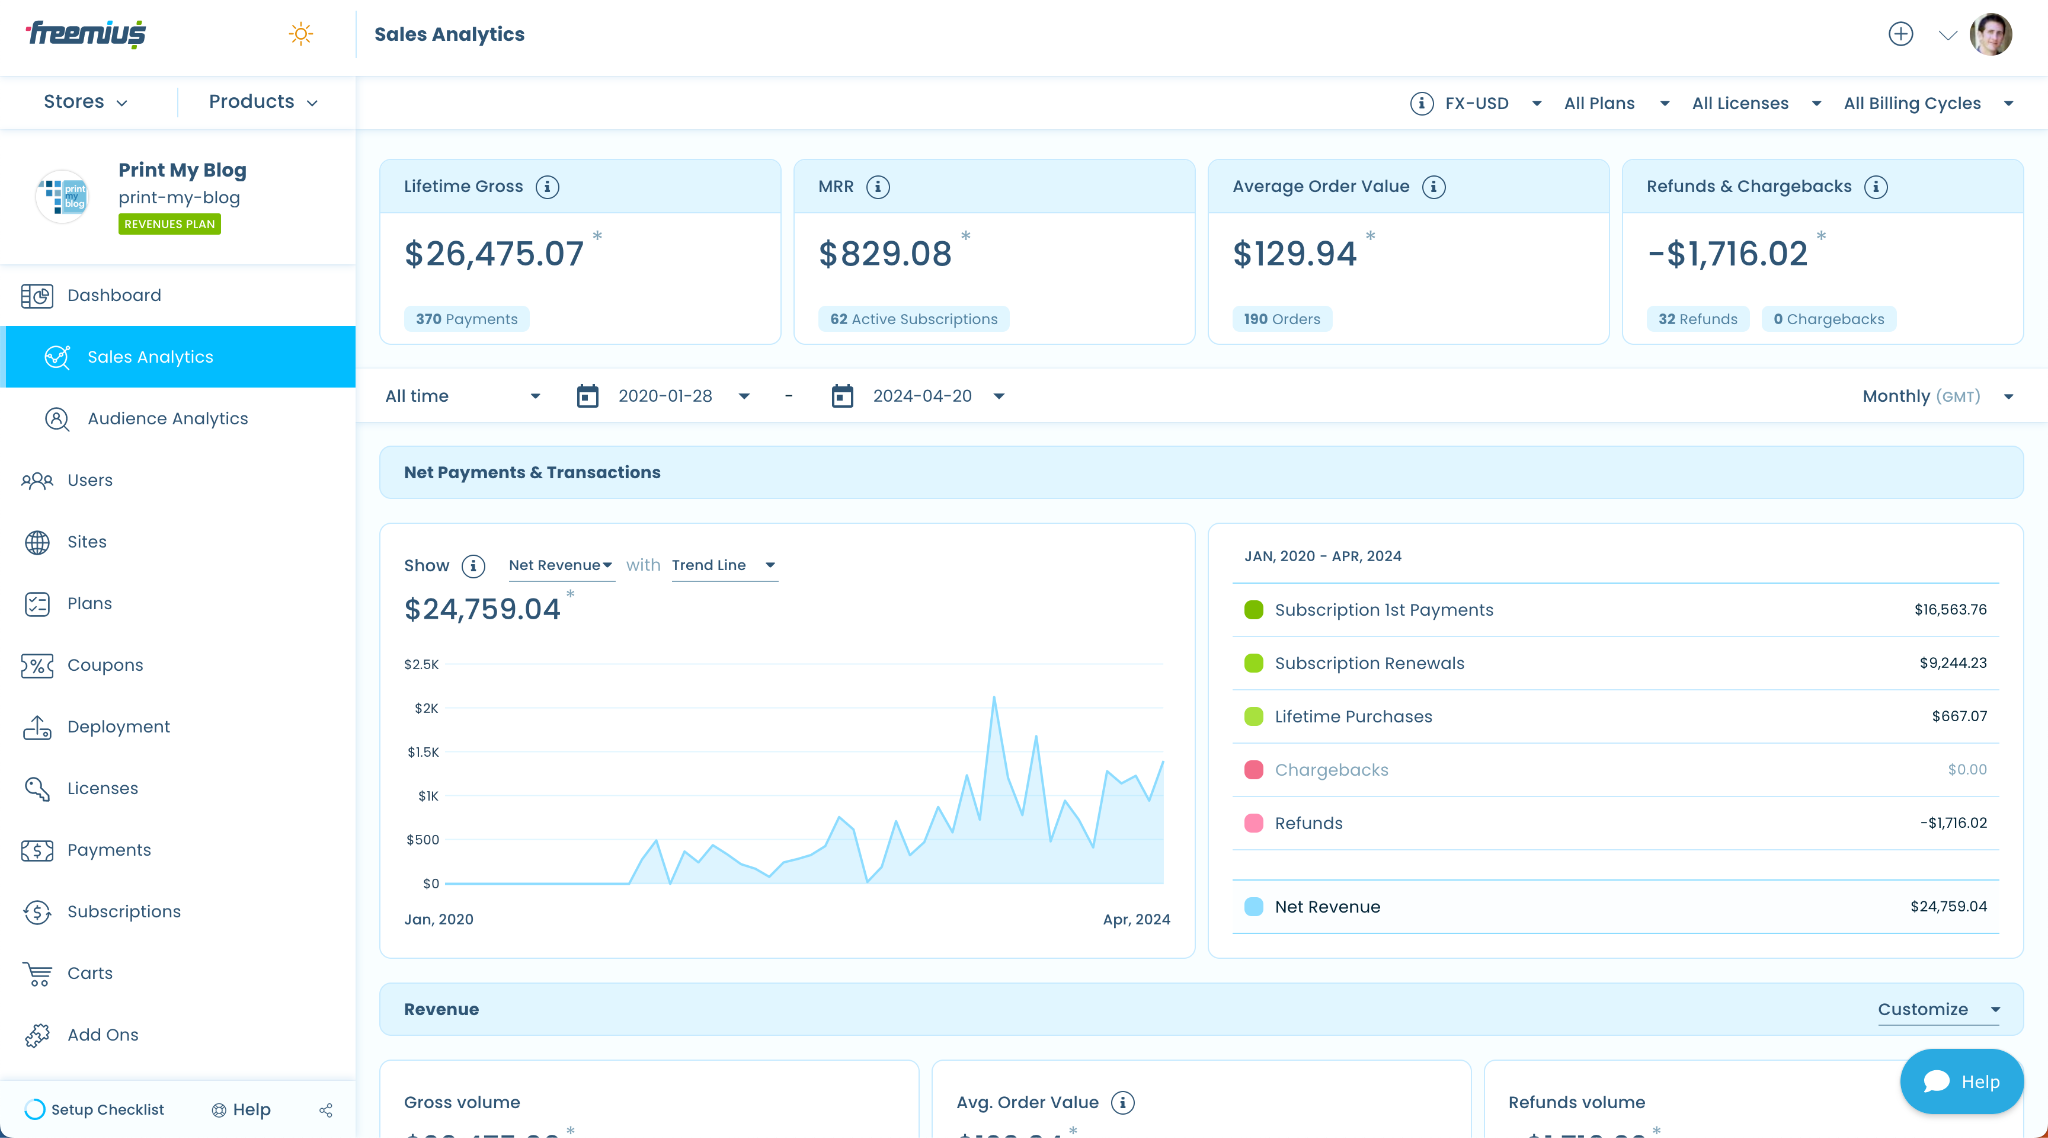 Print My Blog's revenue as shown in the Freemius Developer Dashboard